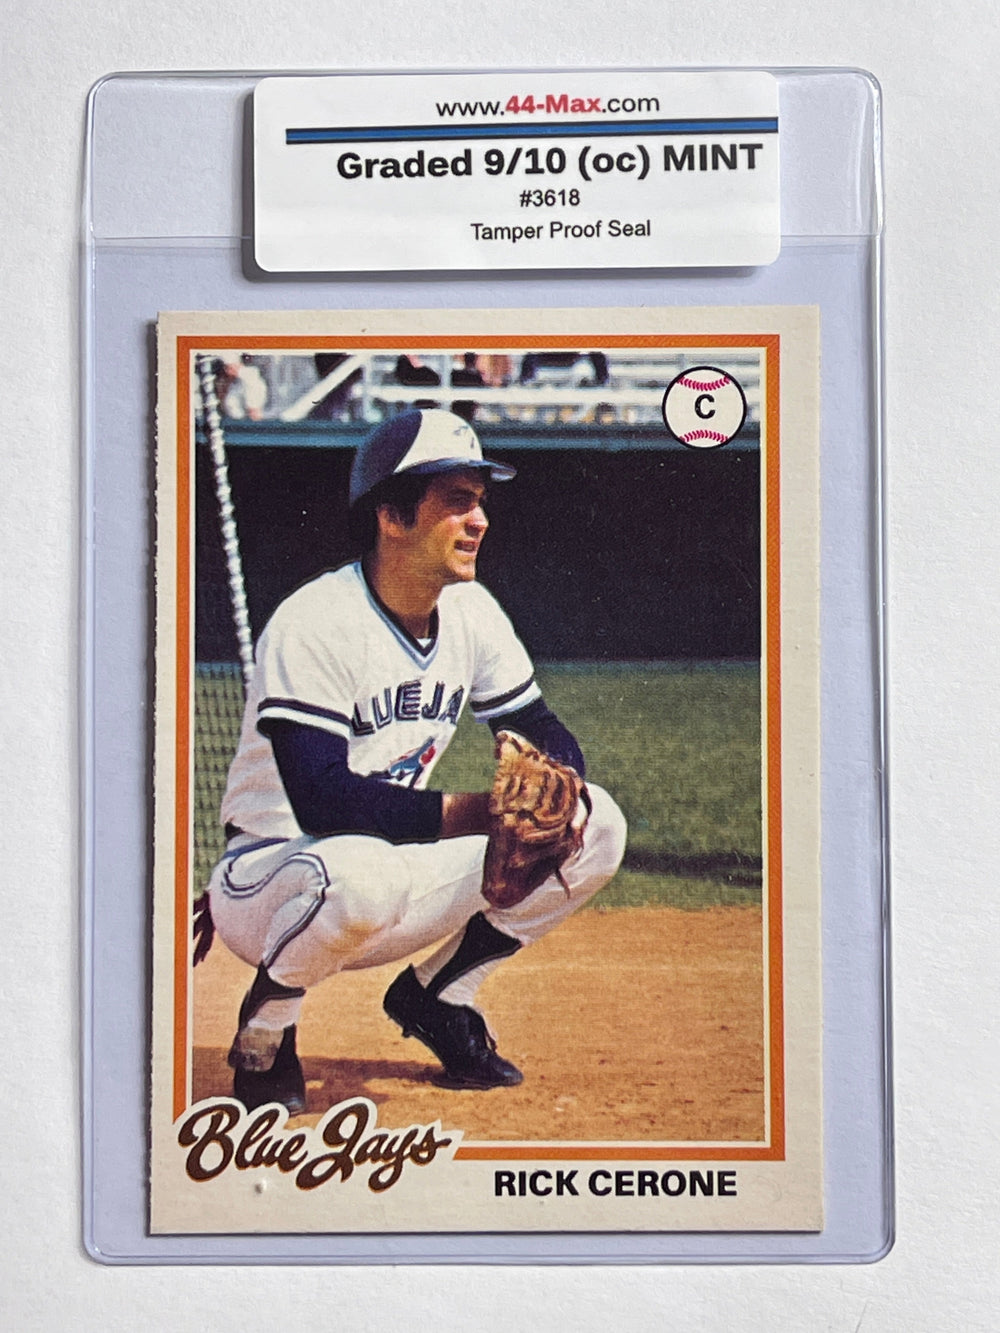 Rick Cerone 1978 O-Pee-Chee Baseball Card. 44-Max 9/10 (oc) MINT #3618